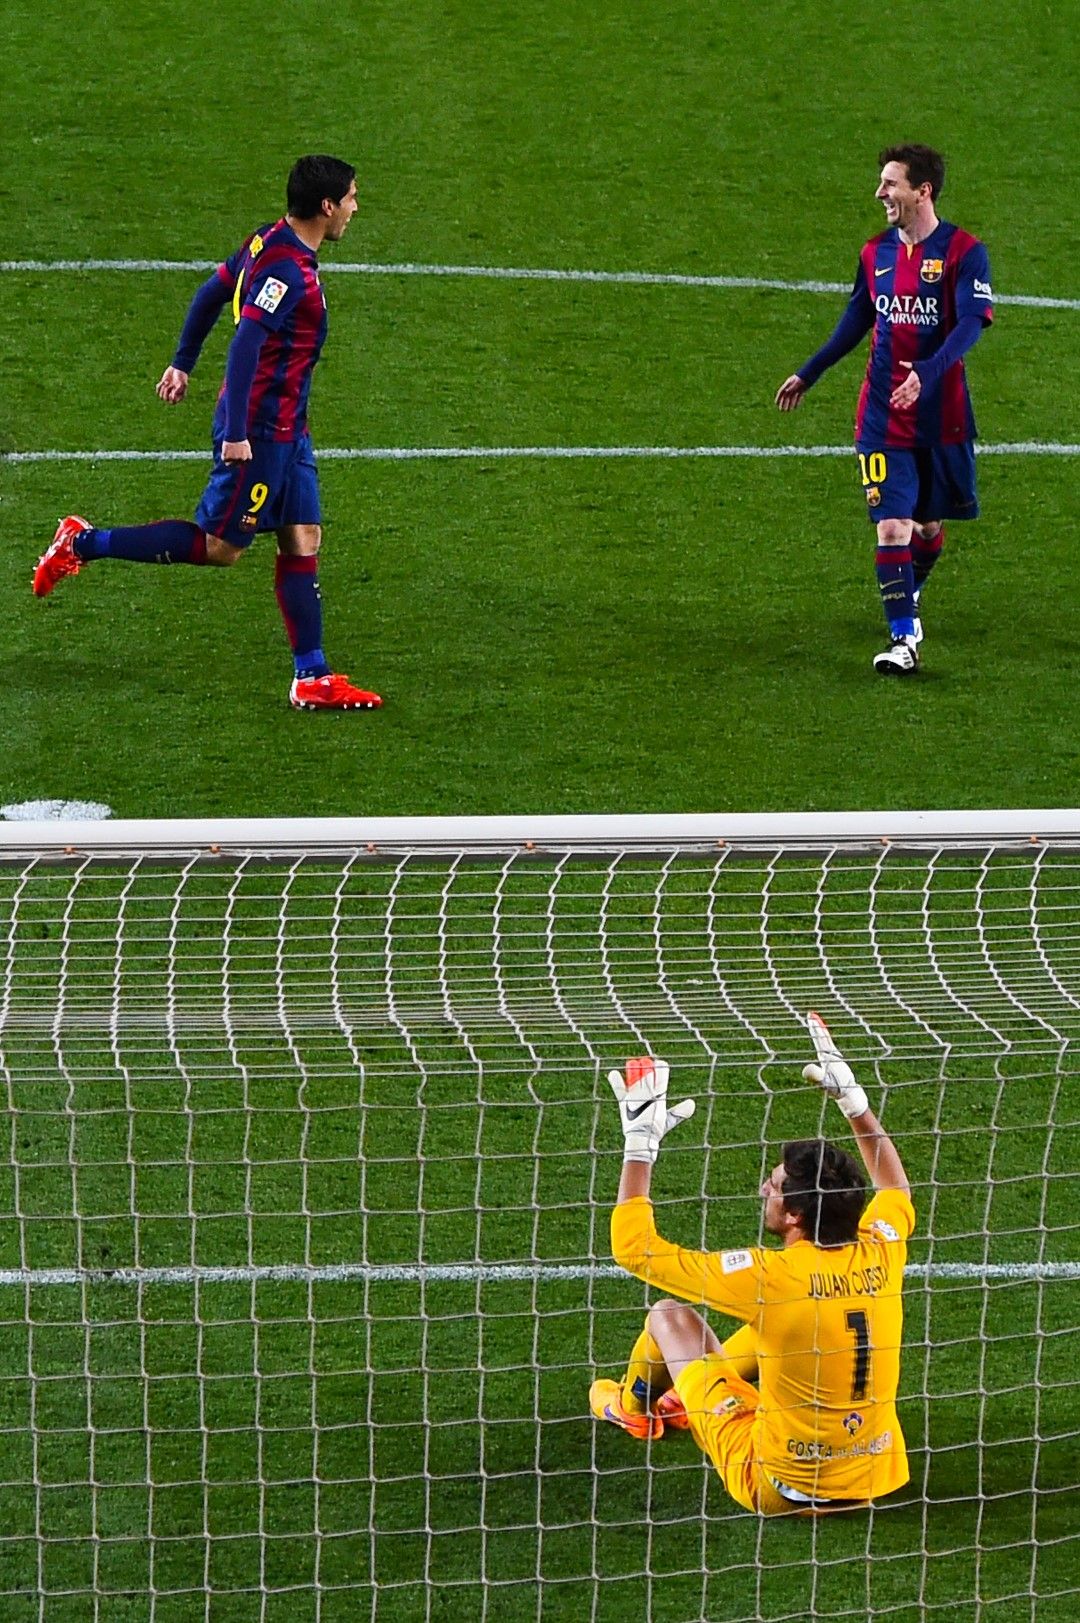  8 април 2015 г., Барселона - Алмерия 4:0, гол №400